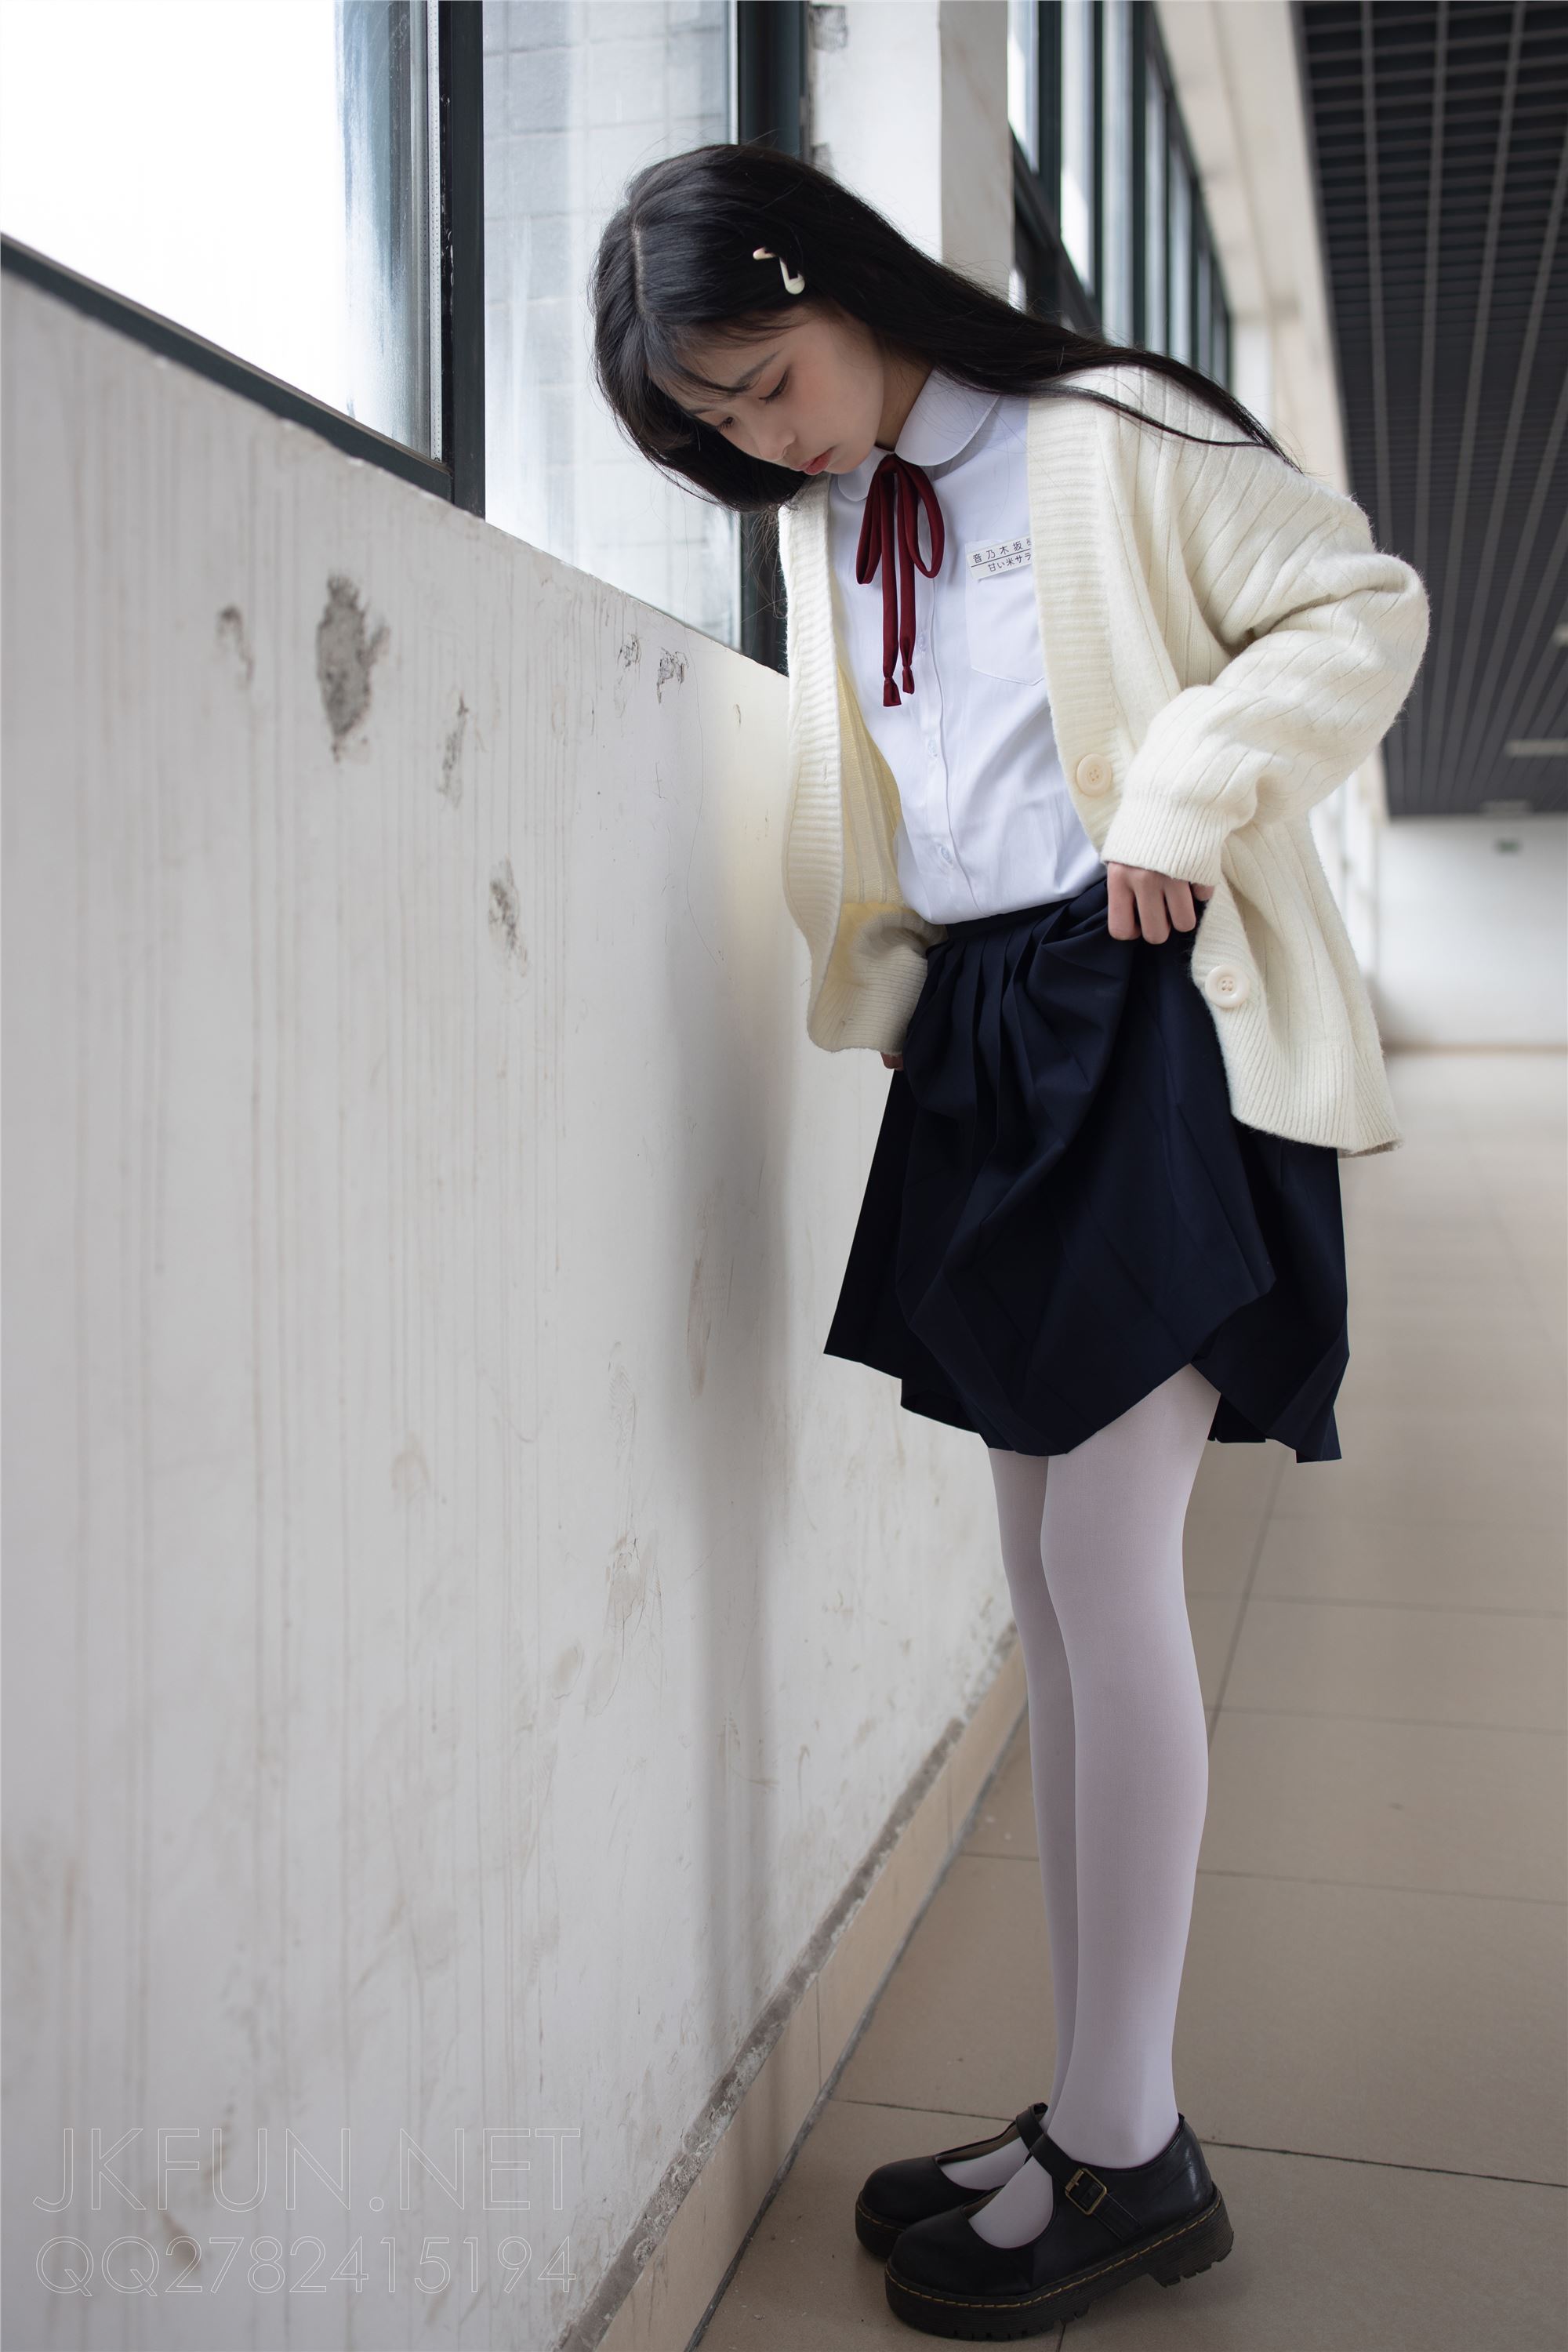 [Sen Luo financial group] Rose's full photo jkfun-001 sweet rice pure white silk schoolgirl